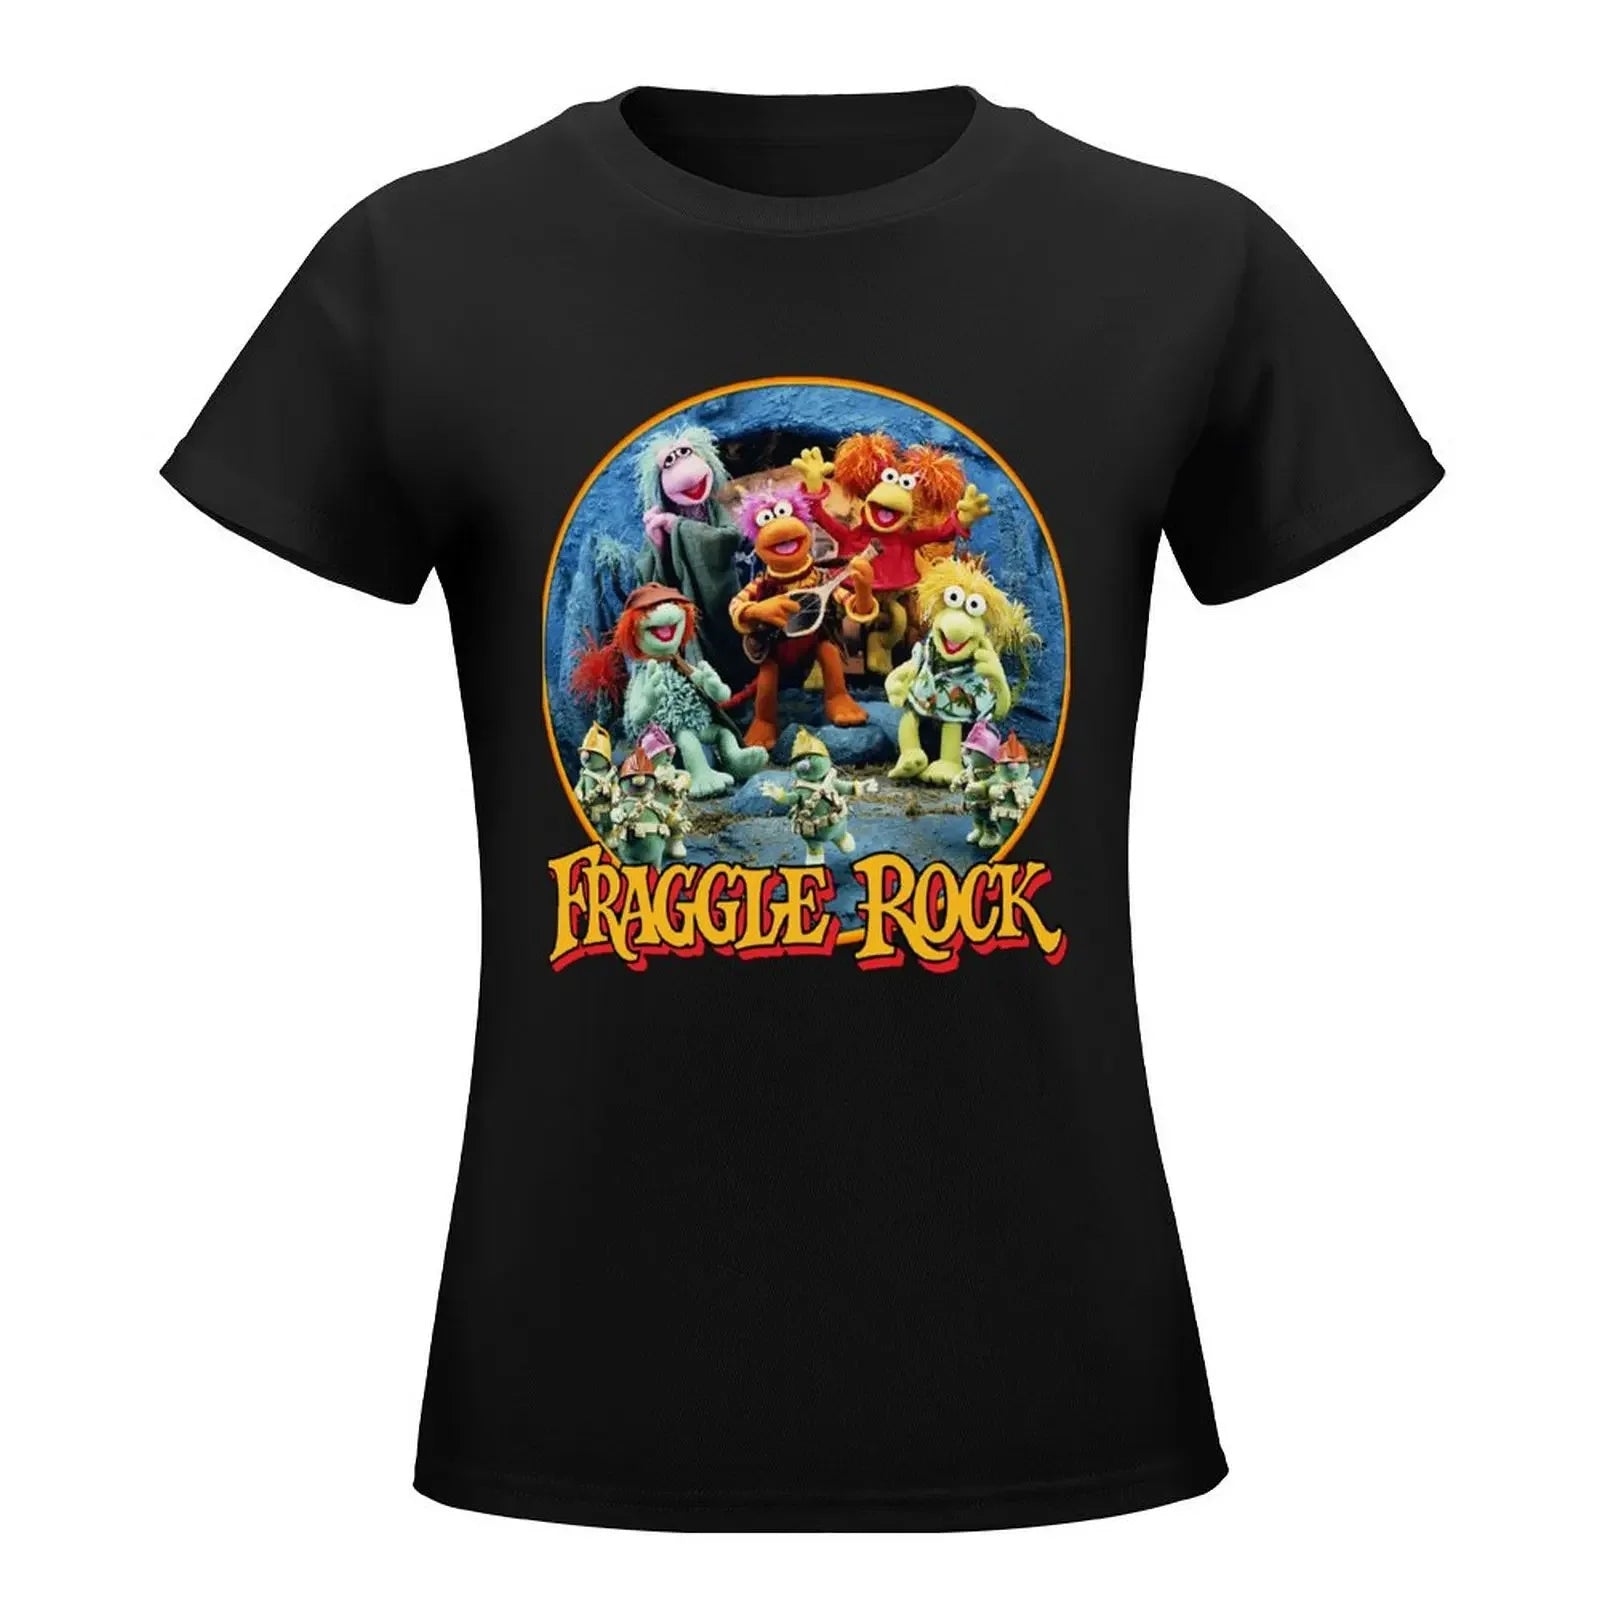 Fraggle Rock Muppets TV Show T-Shirt Gifts For Music Fans Music Vintage Retro Female Clothing Tops Short Sleeve Tee Women's Shirt - Premium tshirt from Lizard Vigilante - Just $21.99! Shop now at Lizard Vigilante